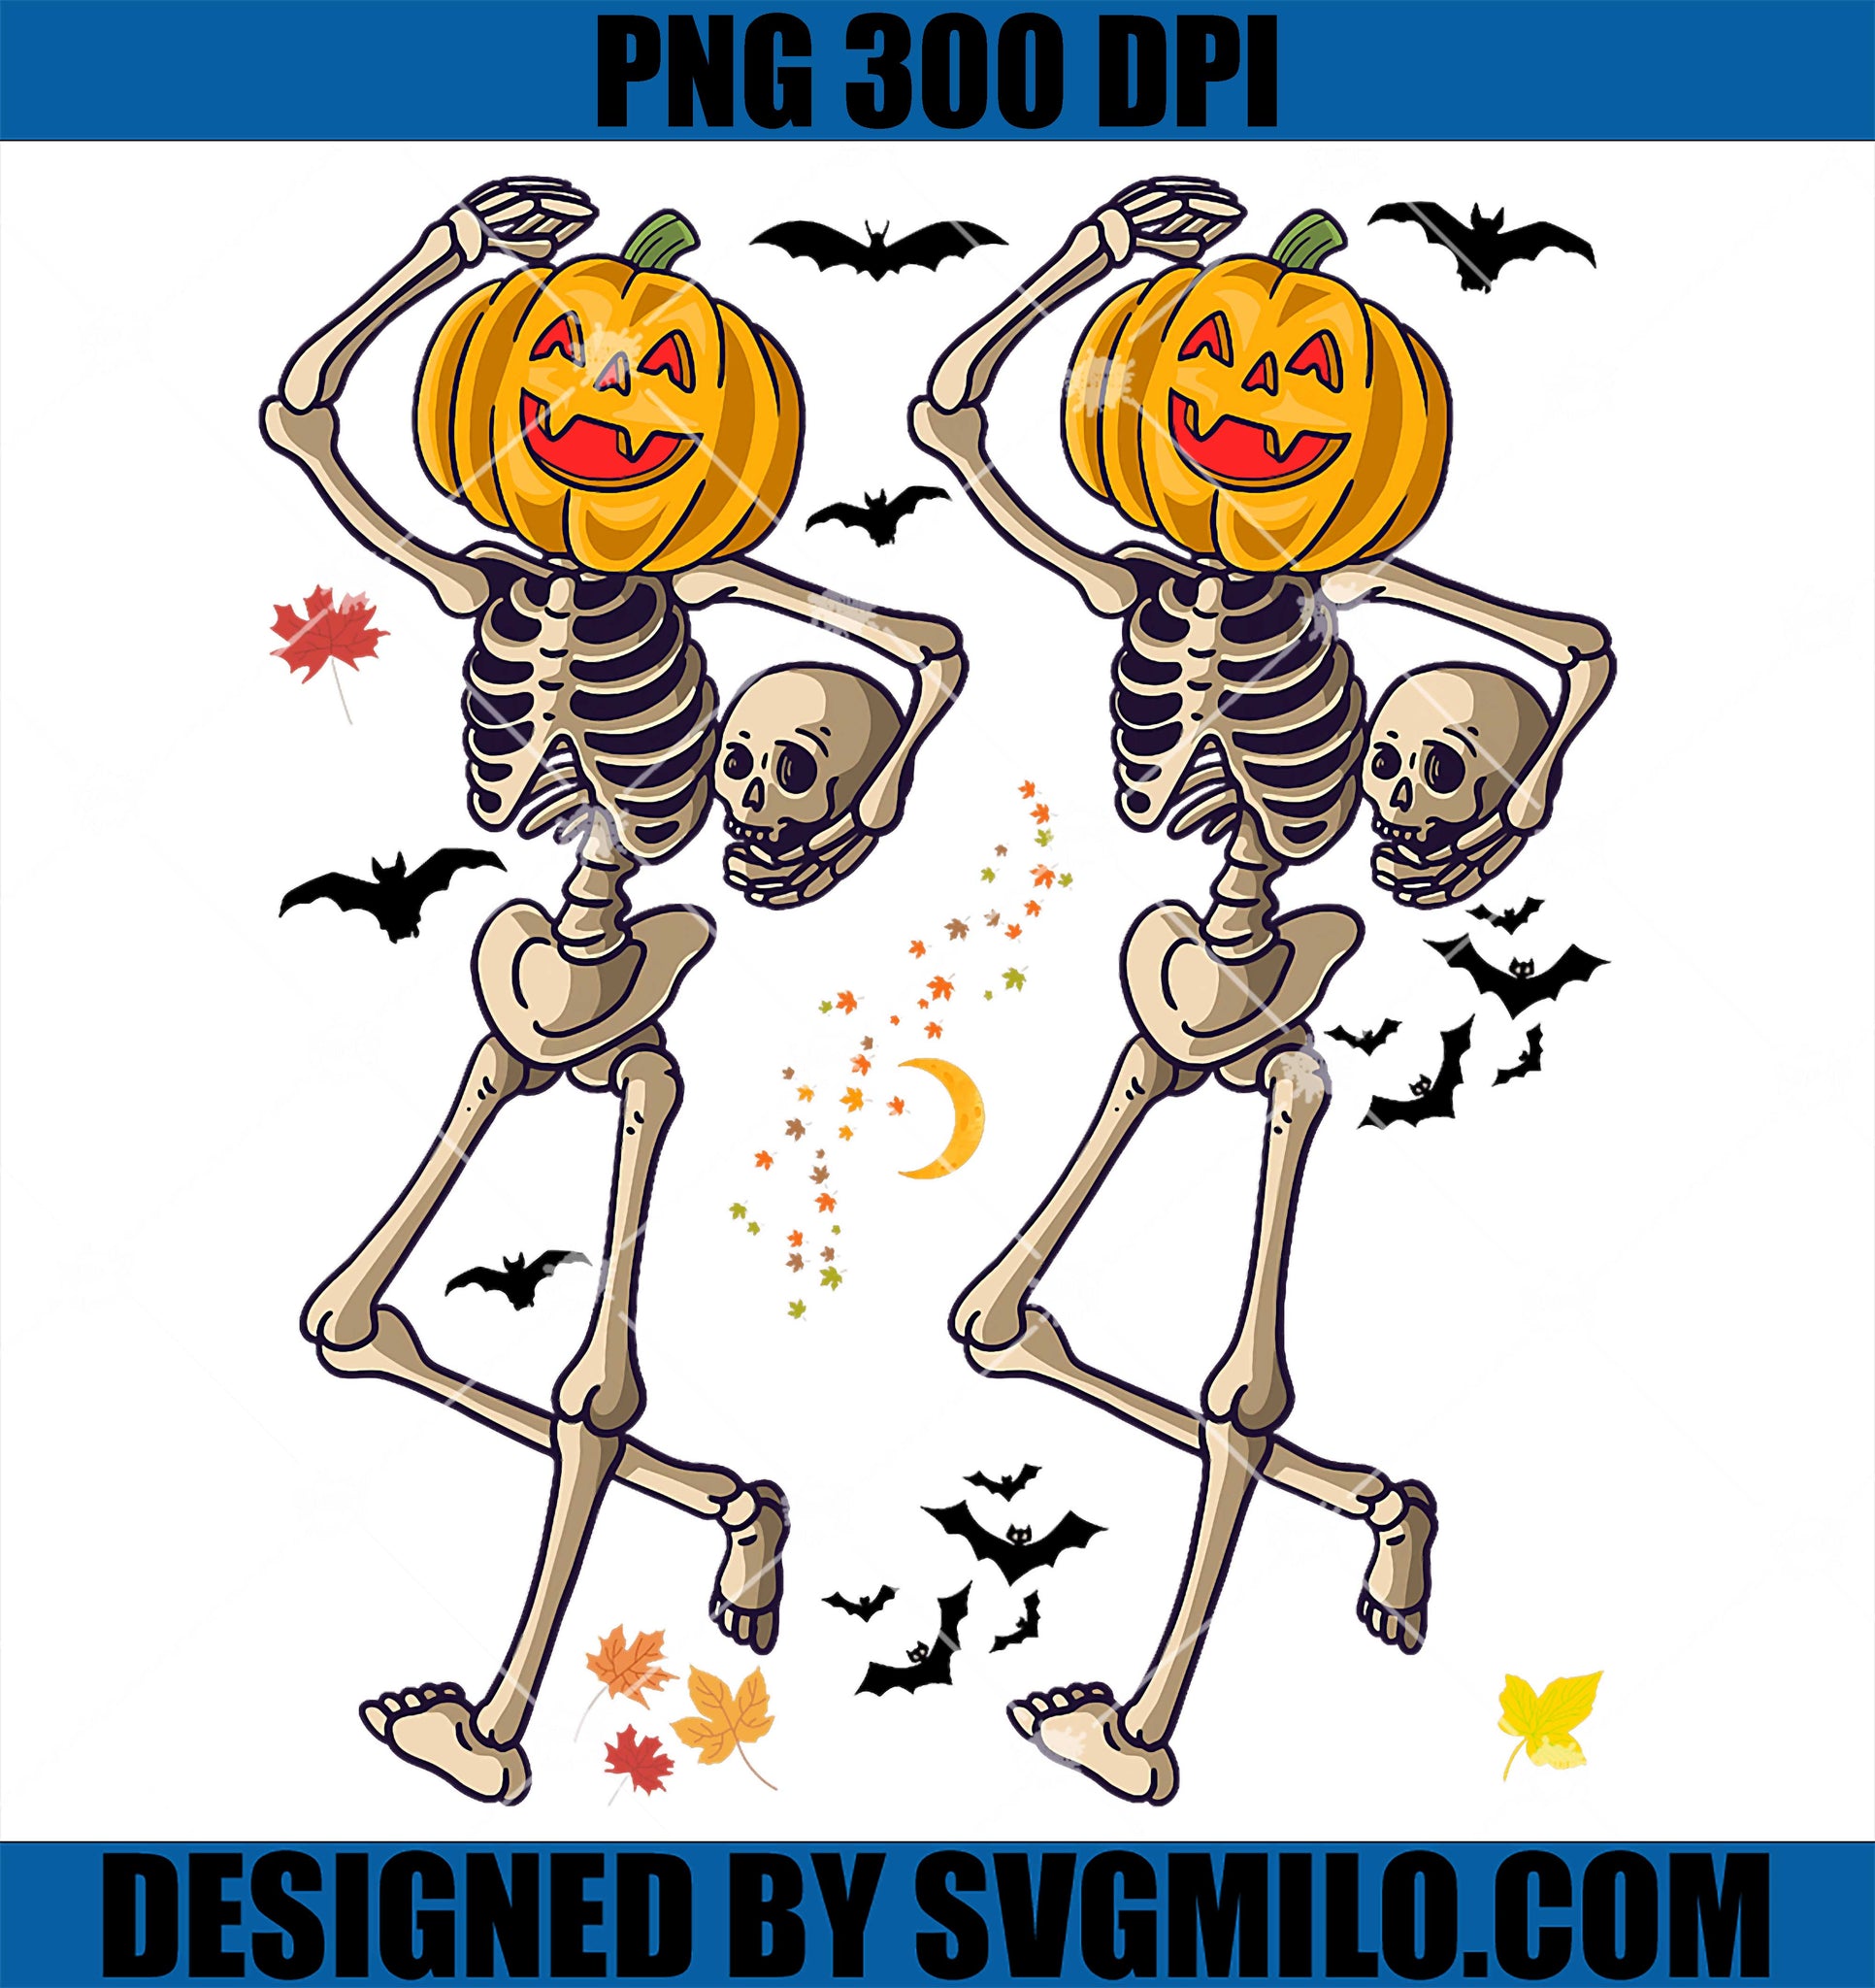 Fun Halloween Skeleton Pumpkin PNG, Skeleton Pumpkin PNG